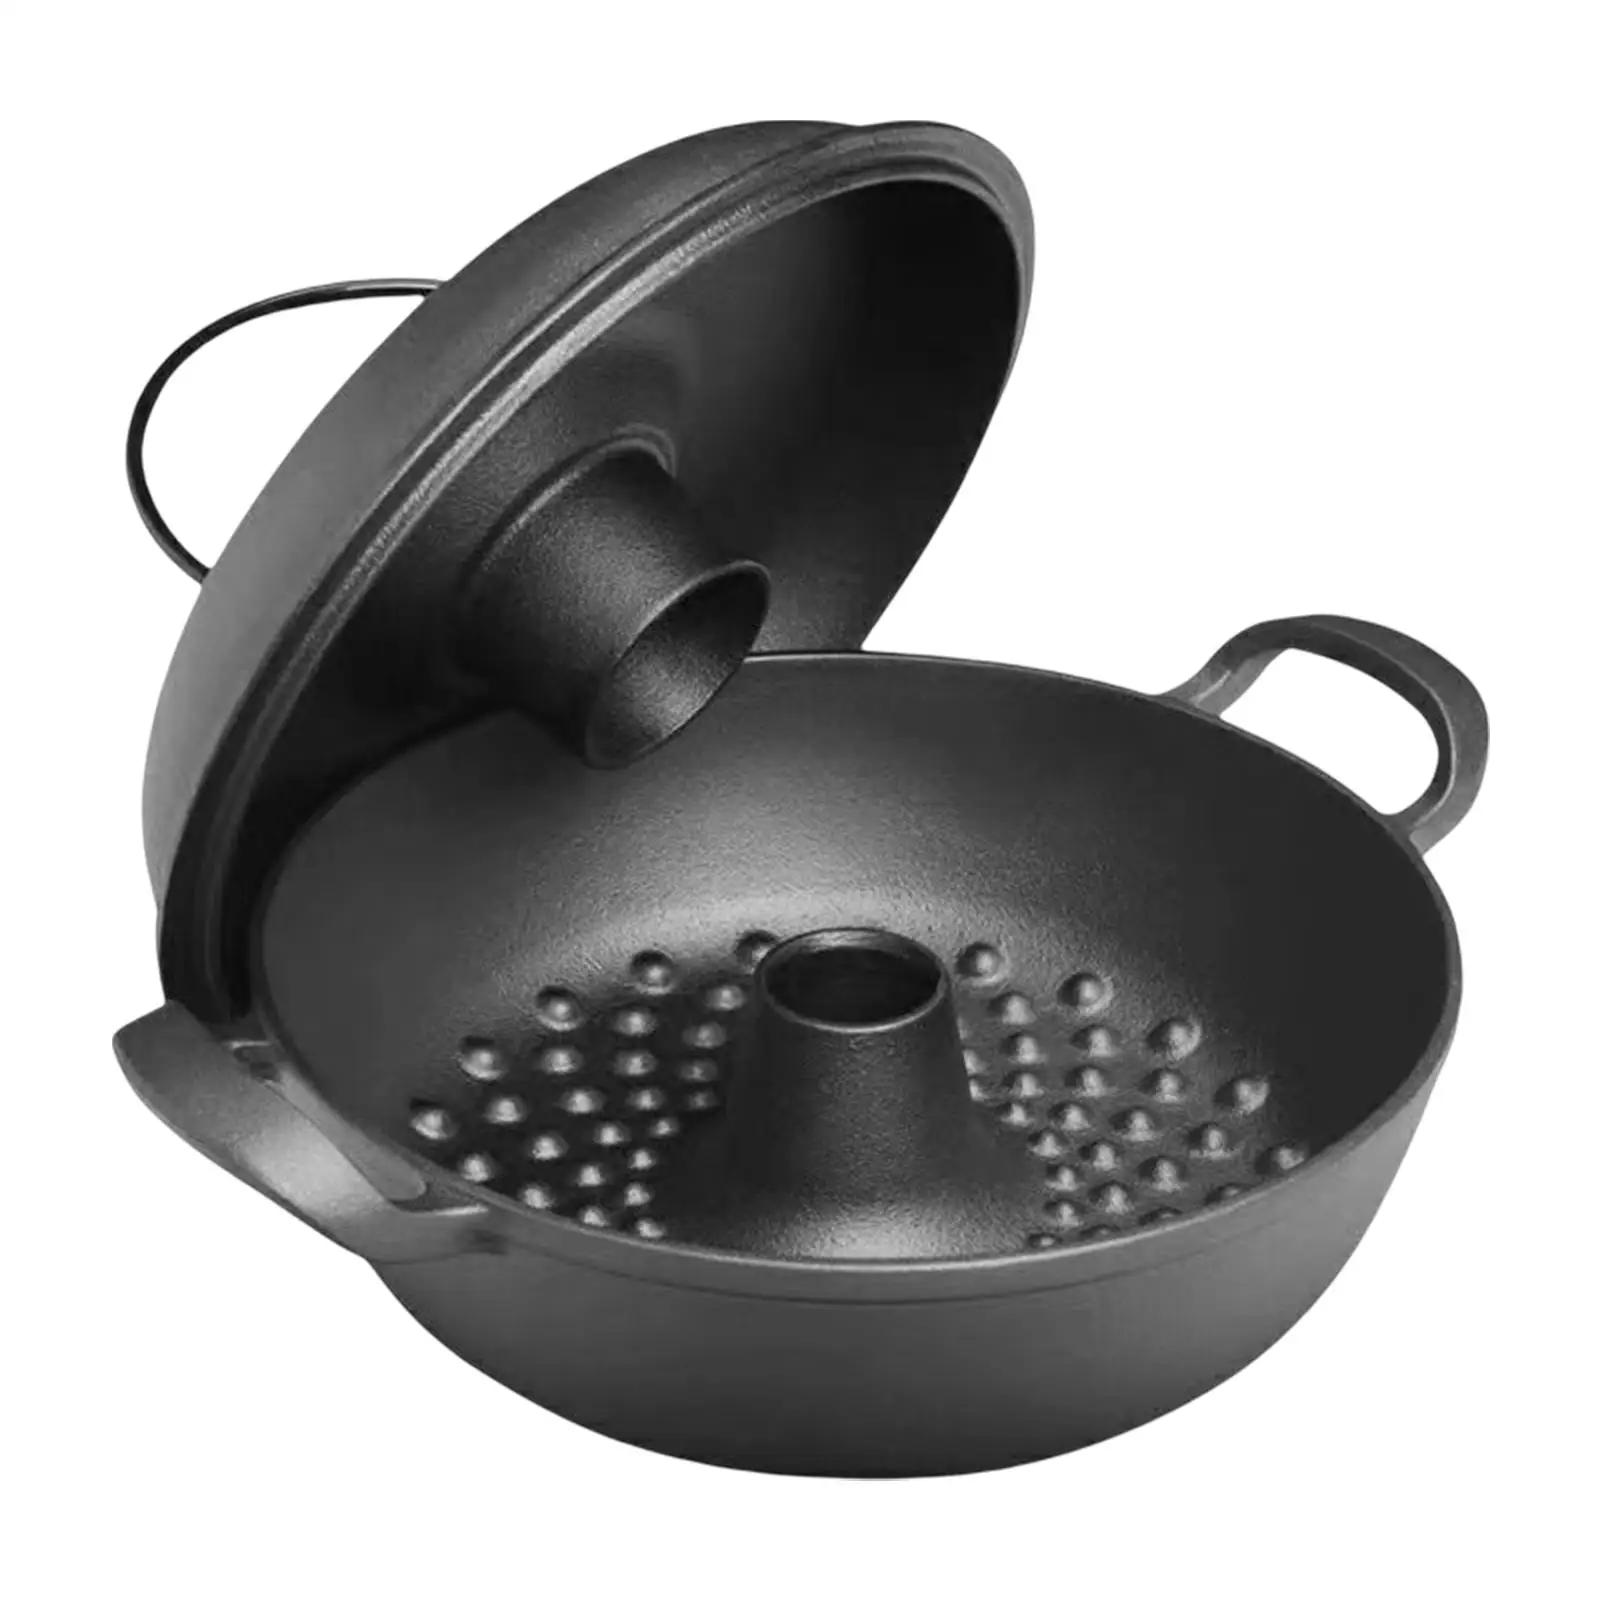 Roast Baking Pan Multi Use Durable Cast Iron Serving Pot for Kitchen Picnic